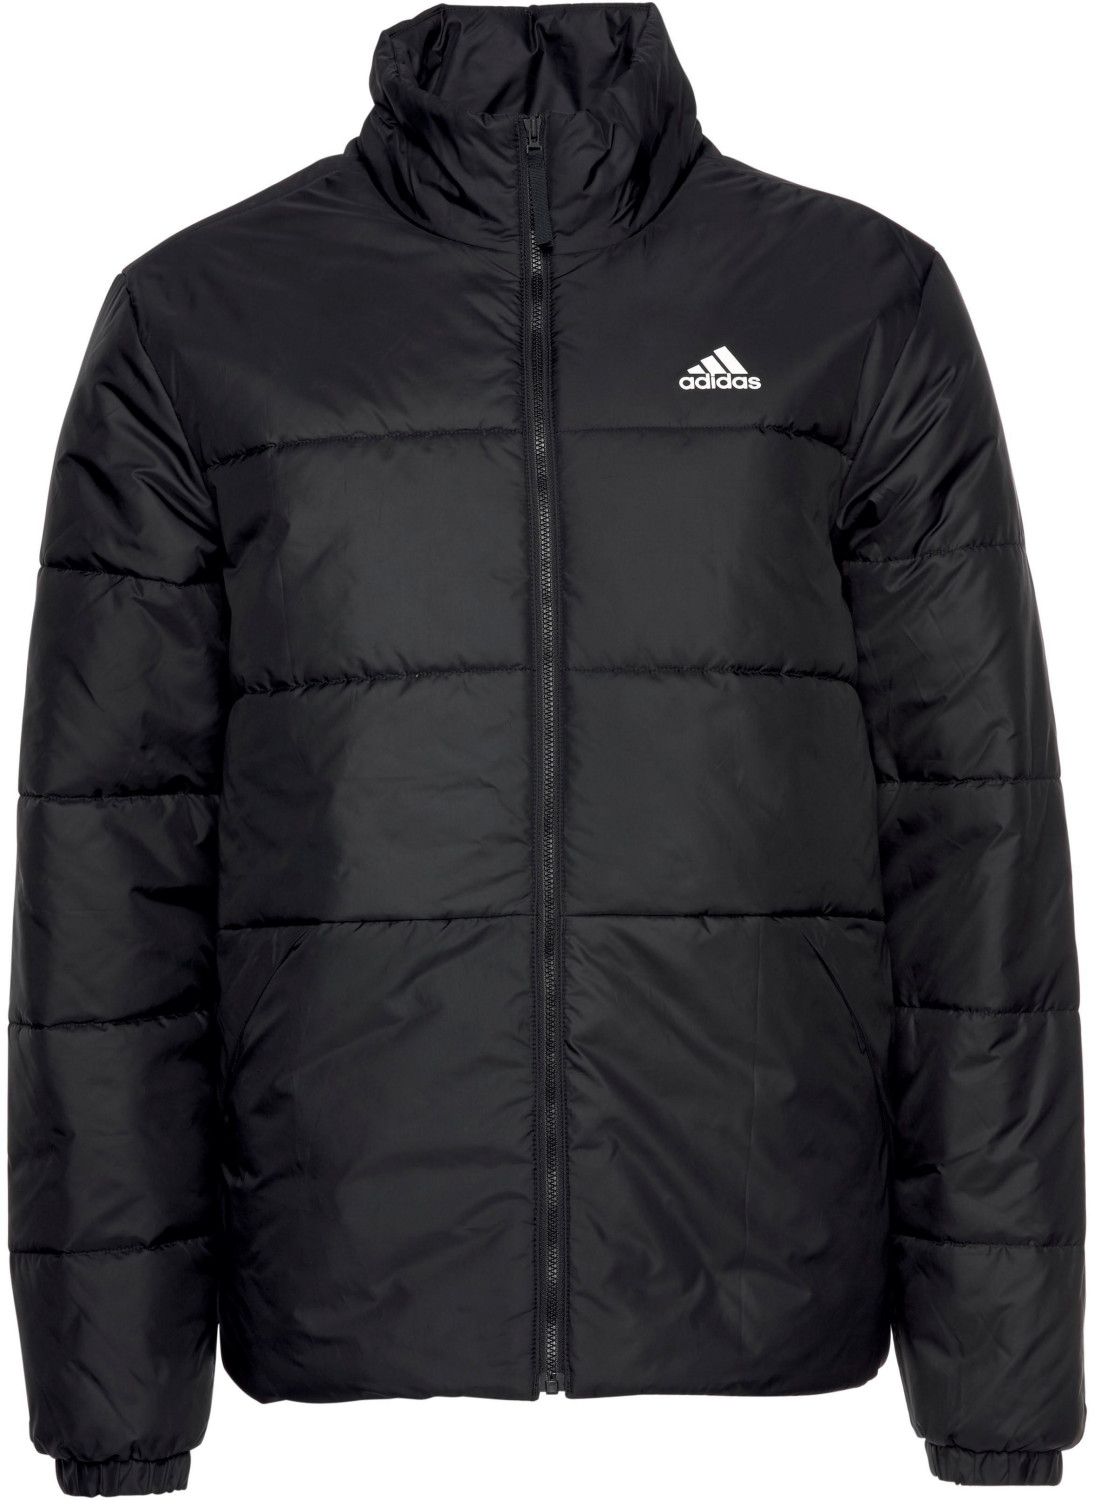 Adidas Men Lifestyle BSC 3-Stripes Insulated Winter Jacket black (DZ1396)